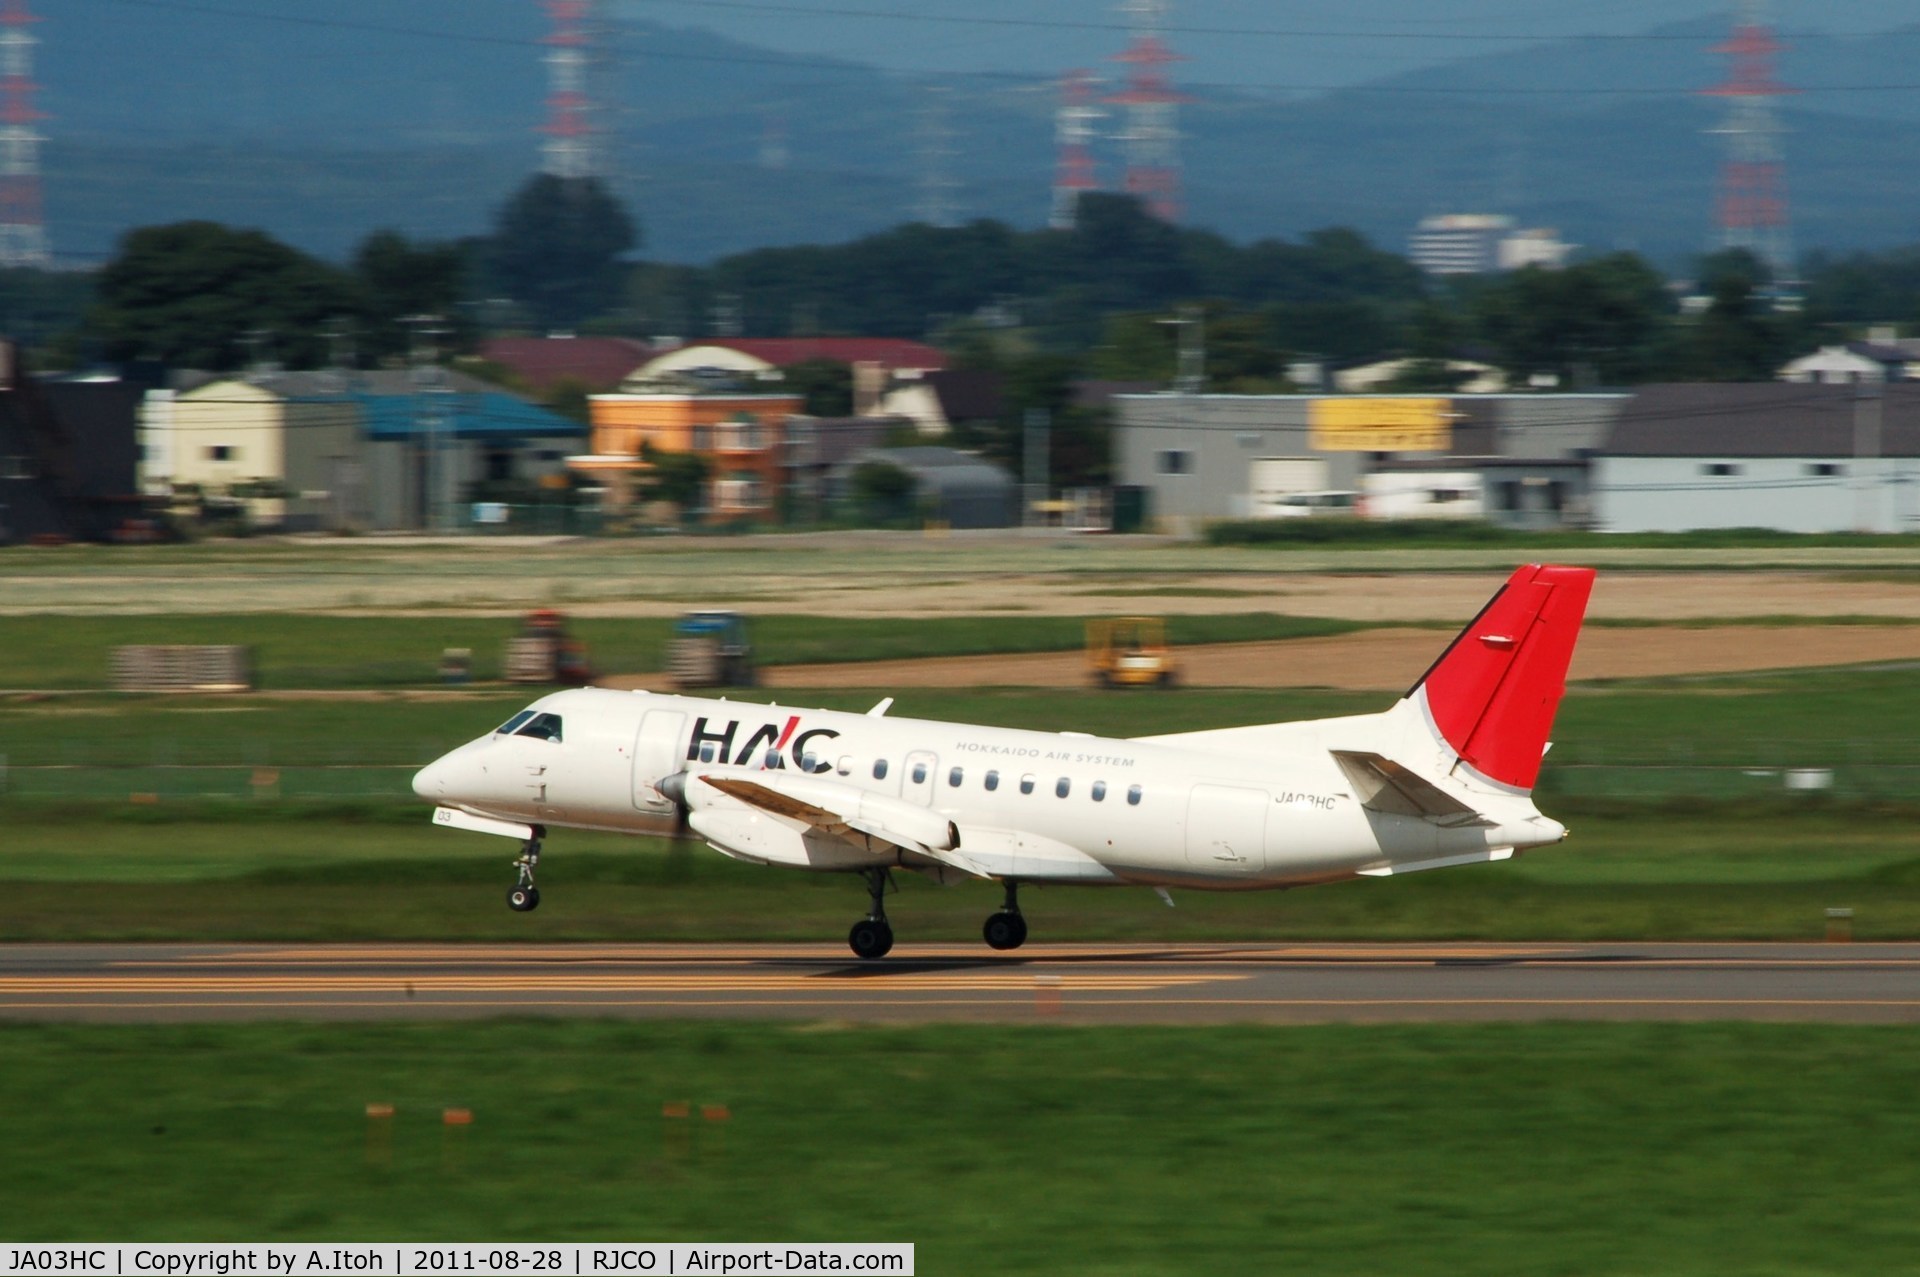 JA03HC, 1999 Saab 340B+ C/N 340B-458, Hokkaido Air System Co.,Ltd (NTH) Call sign NORTH AIR